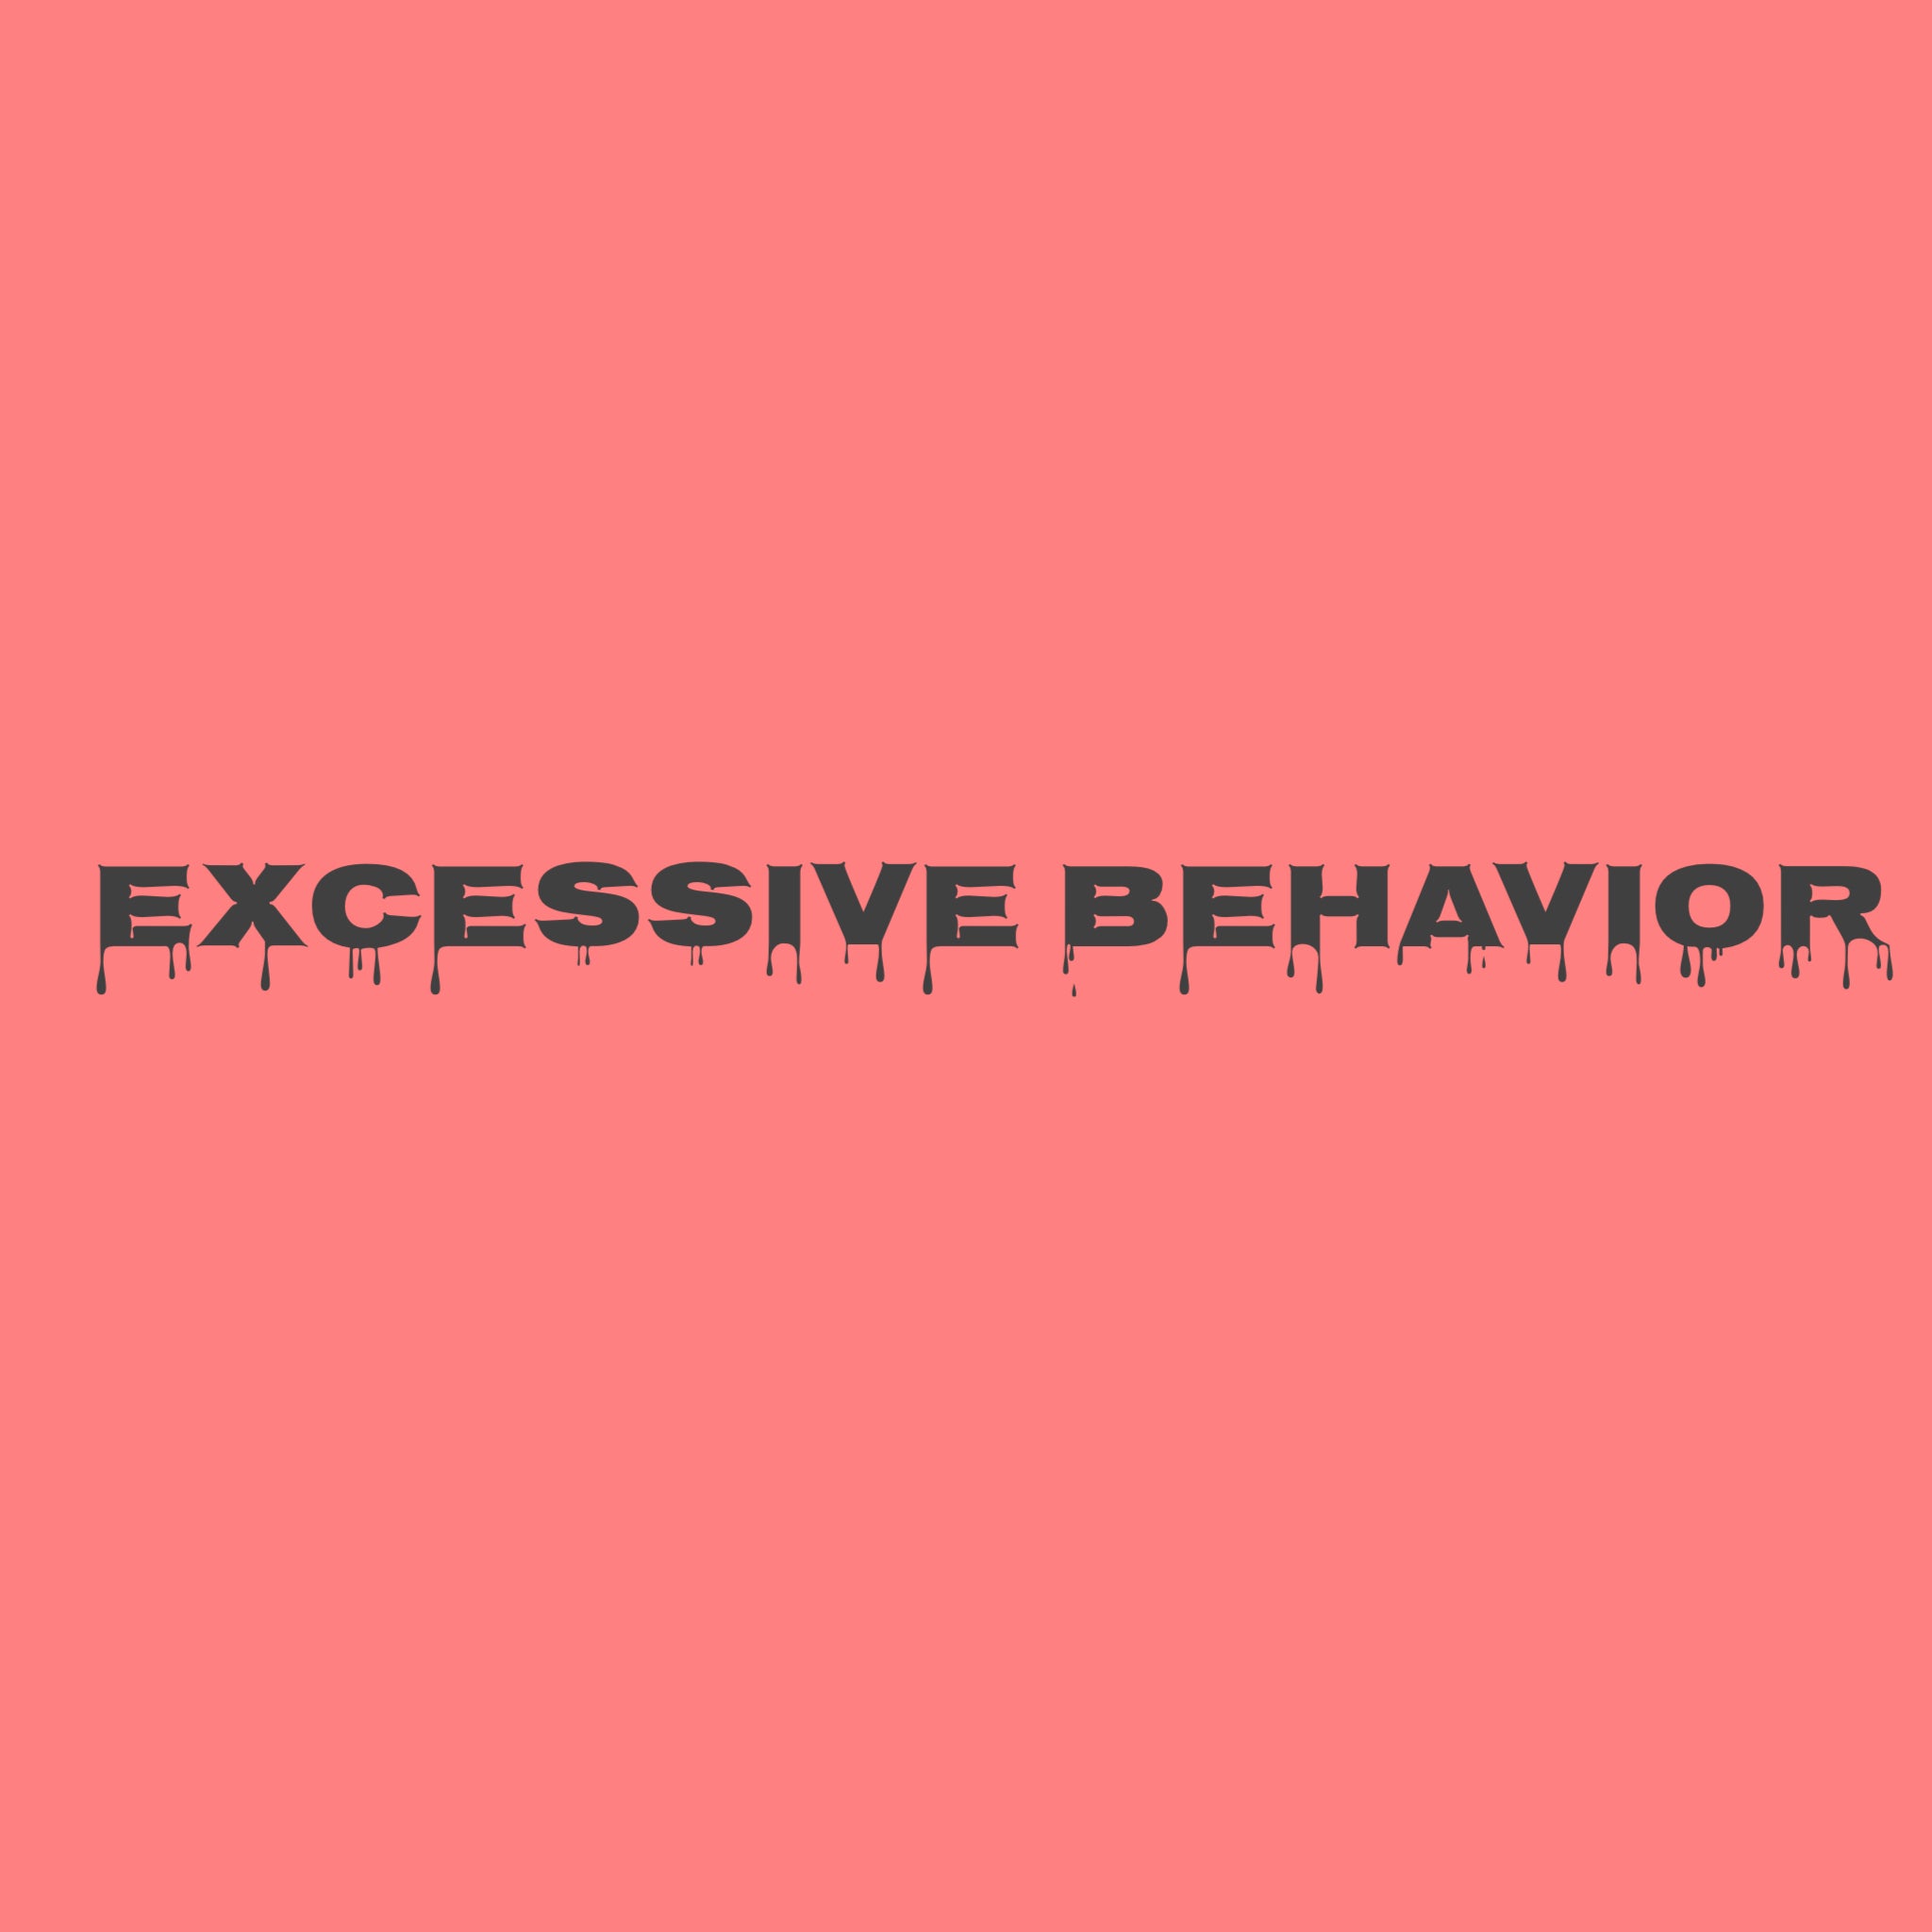 Excessive Behavior